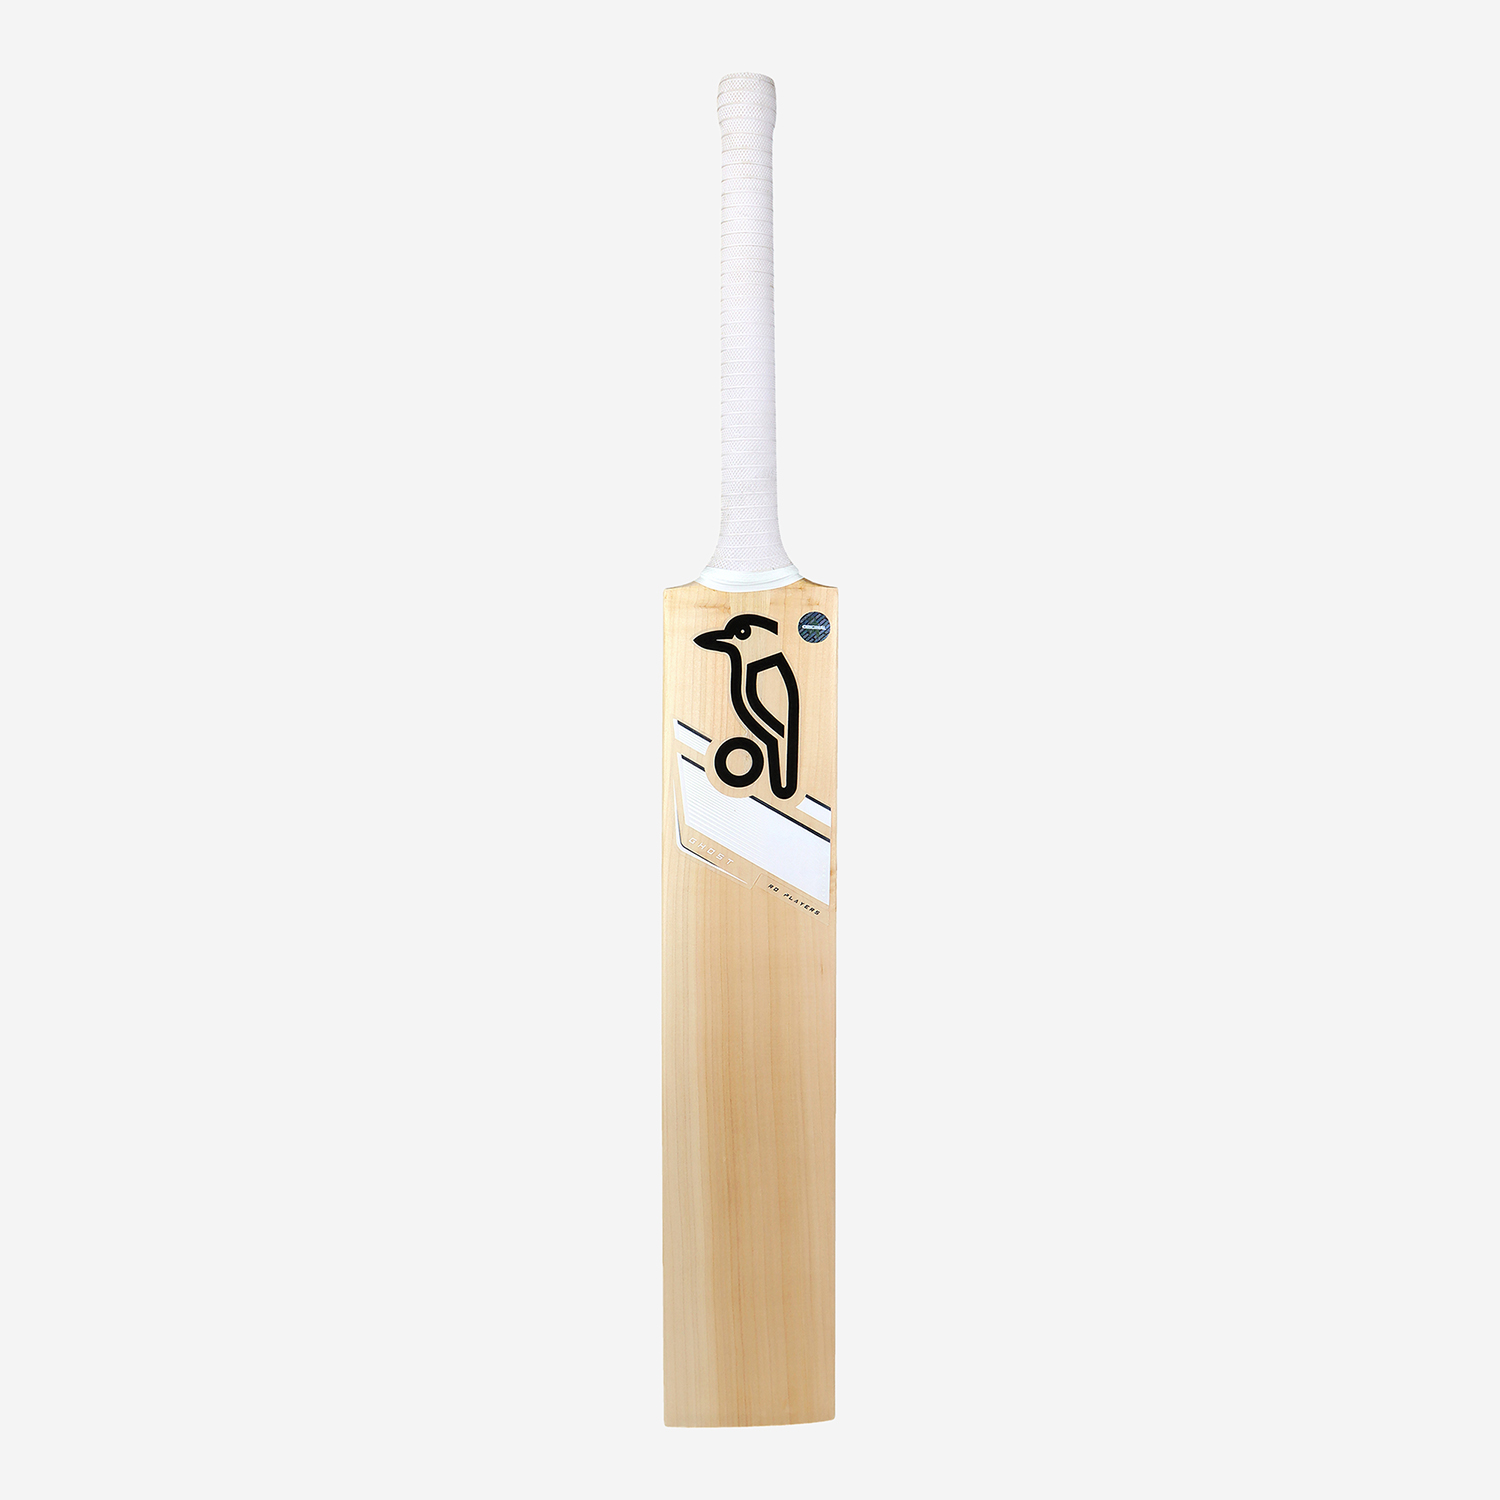 Marnus Labuschagne Players Replica Cricket Bat